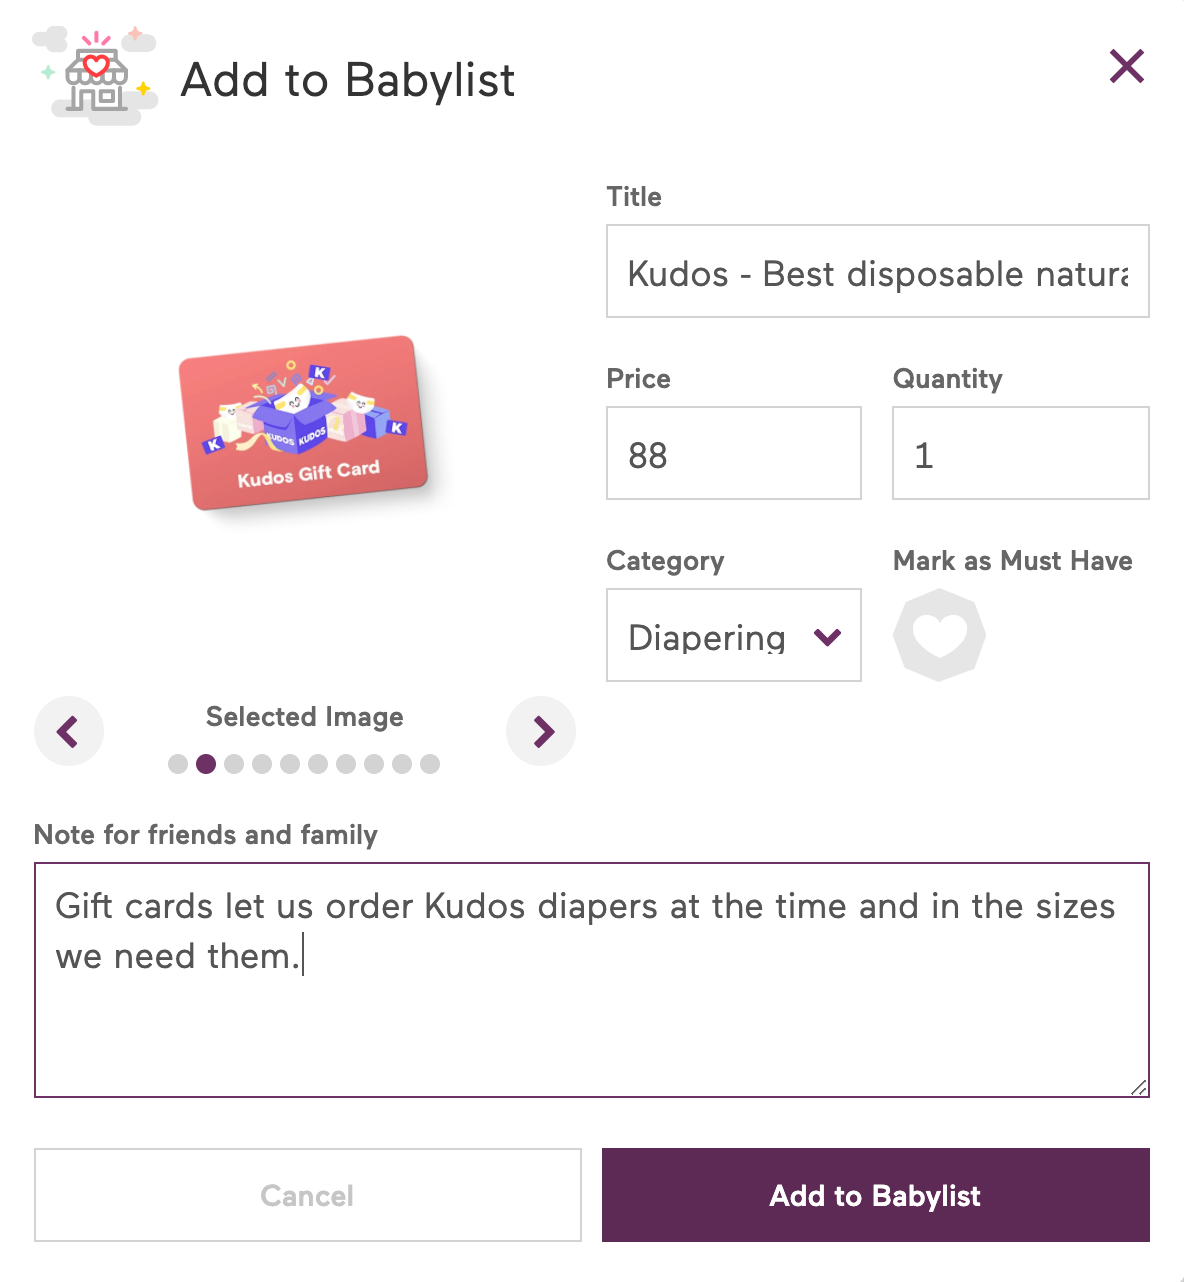 Add Kudos gift card to babylist baby registry